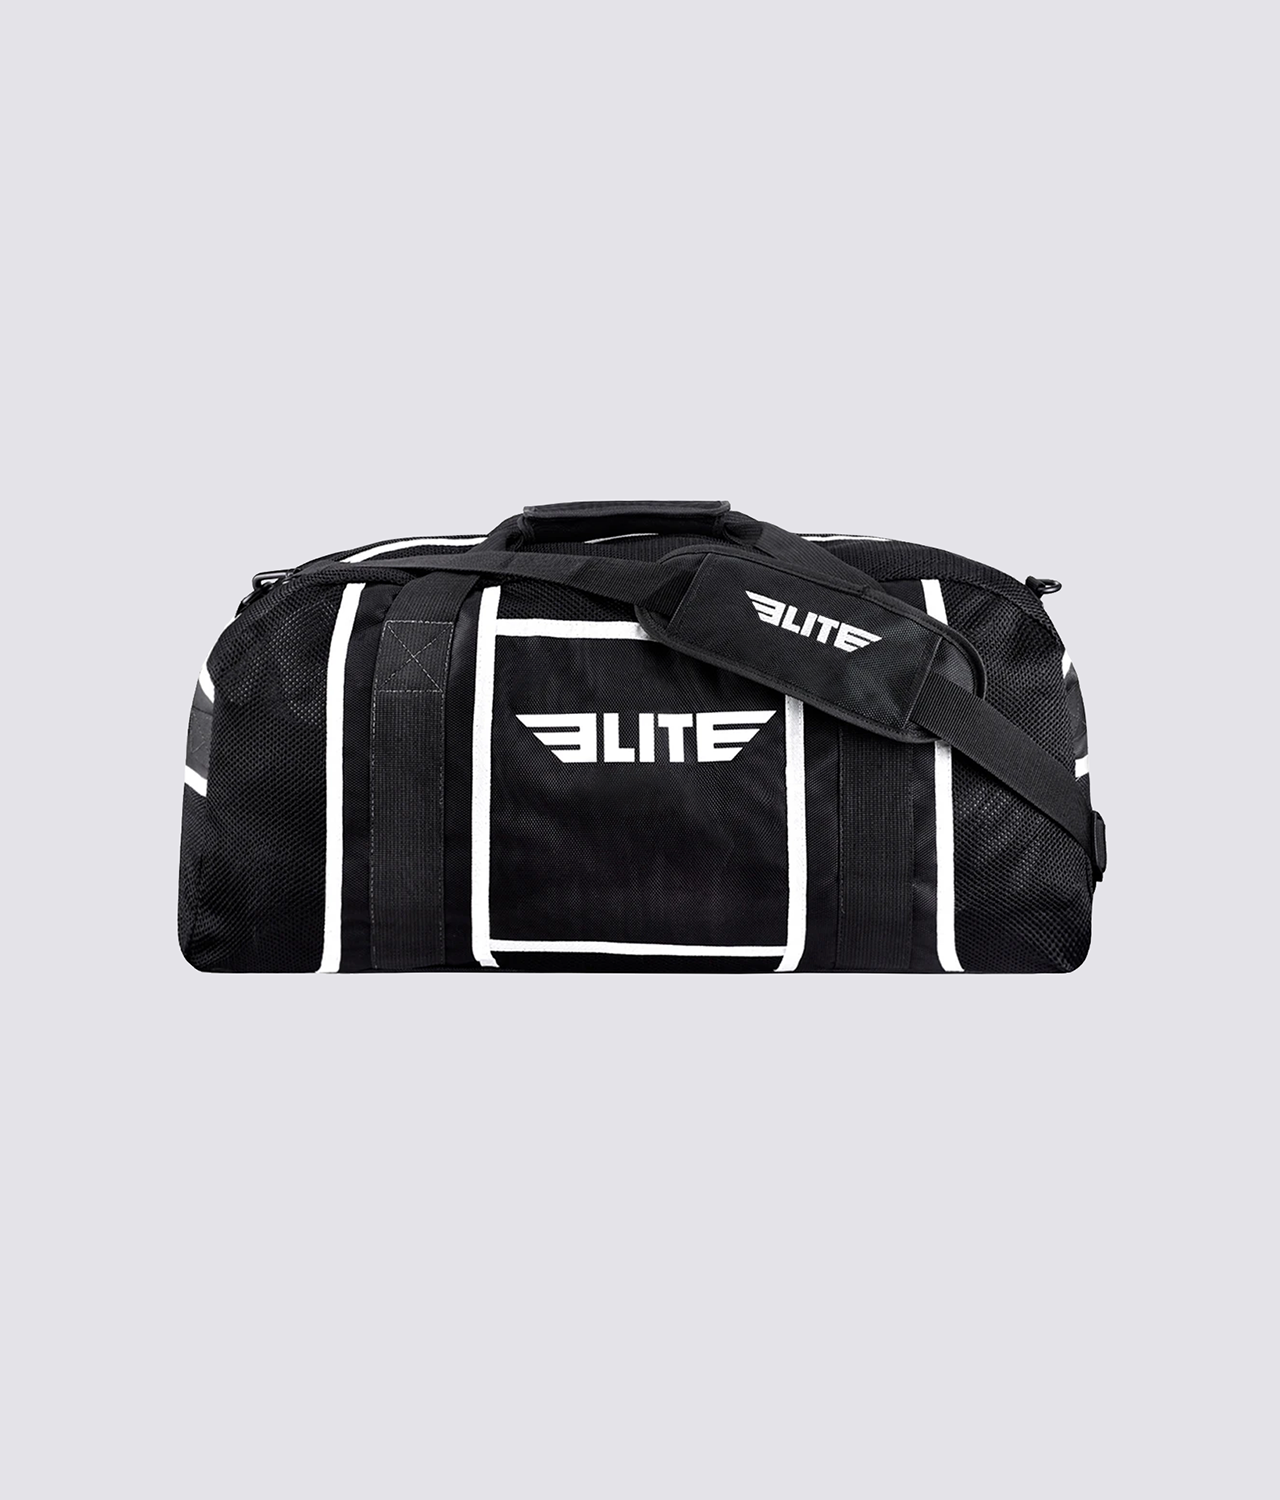 Warrior Black/White Strip Large Duffel Crossfit Gear Gym Bag